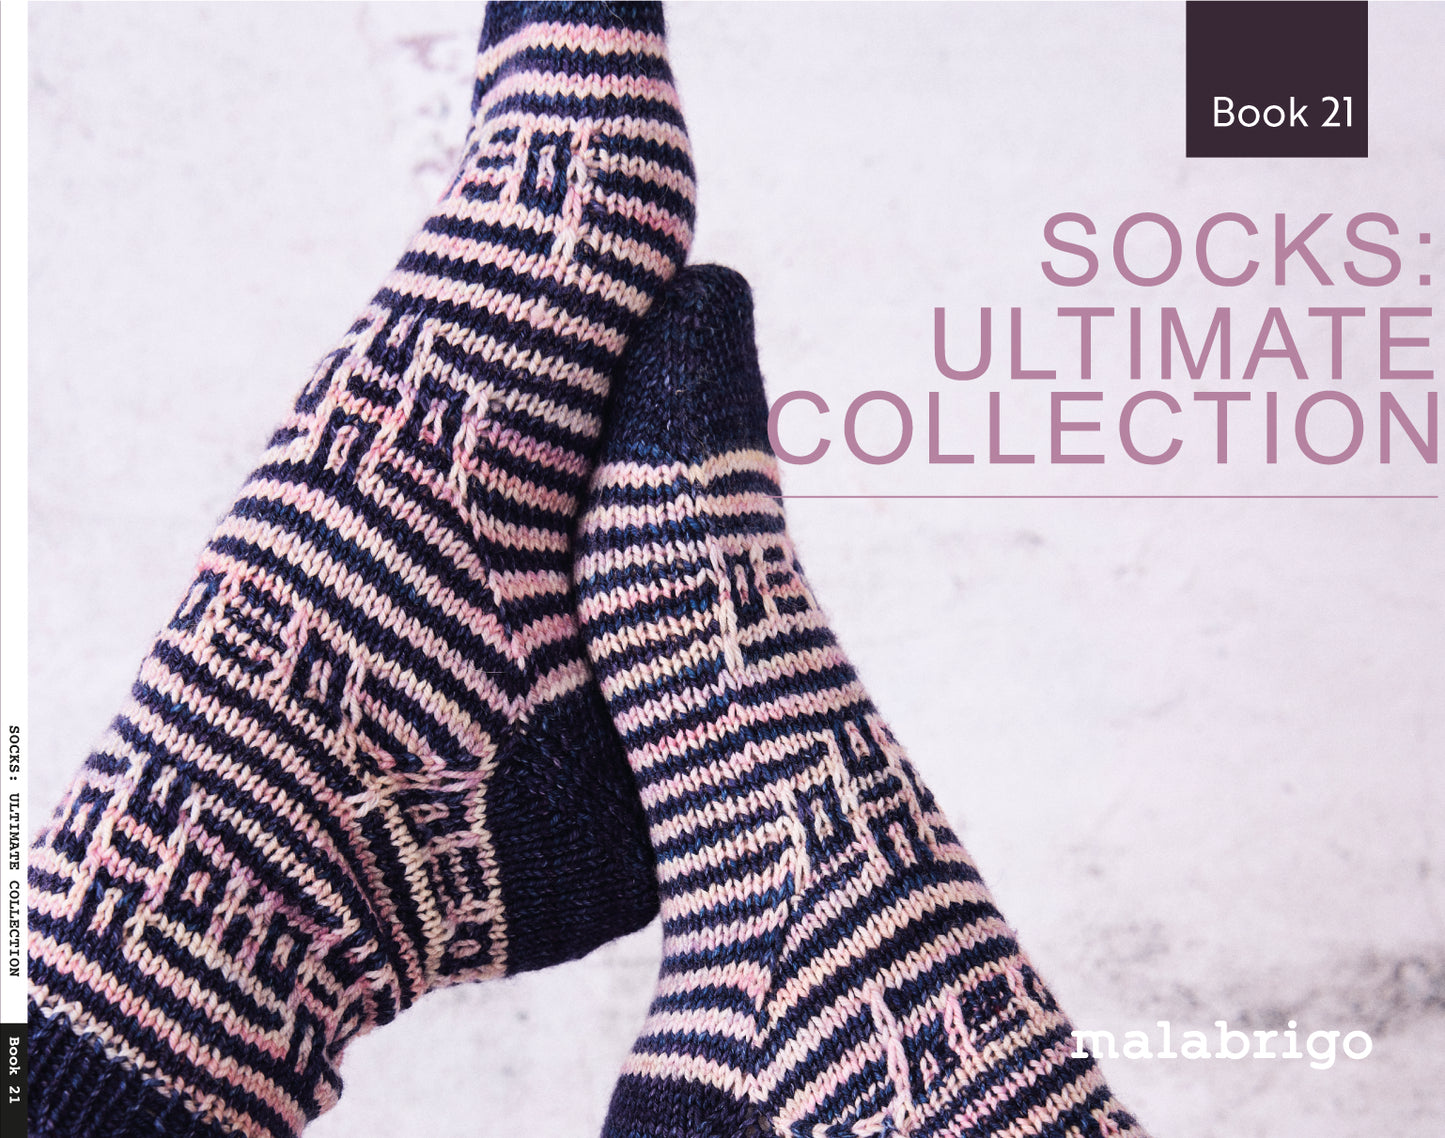 Malabrigo Book 21: Socks: Ultimate Collection